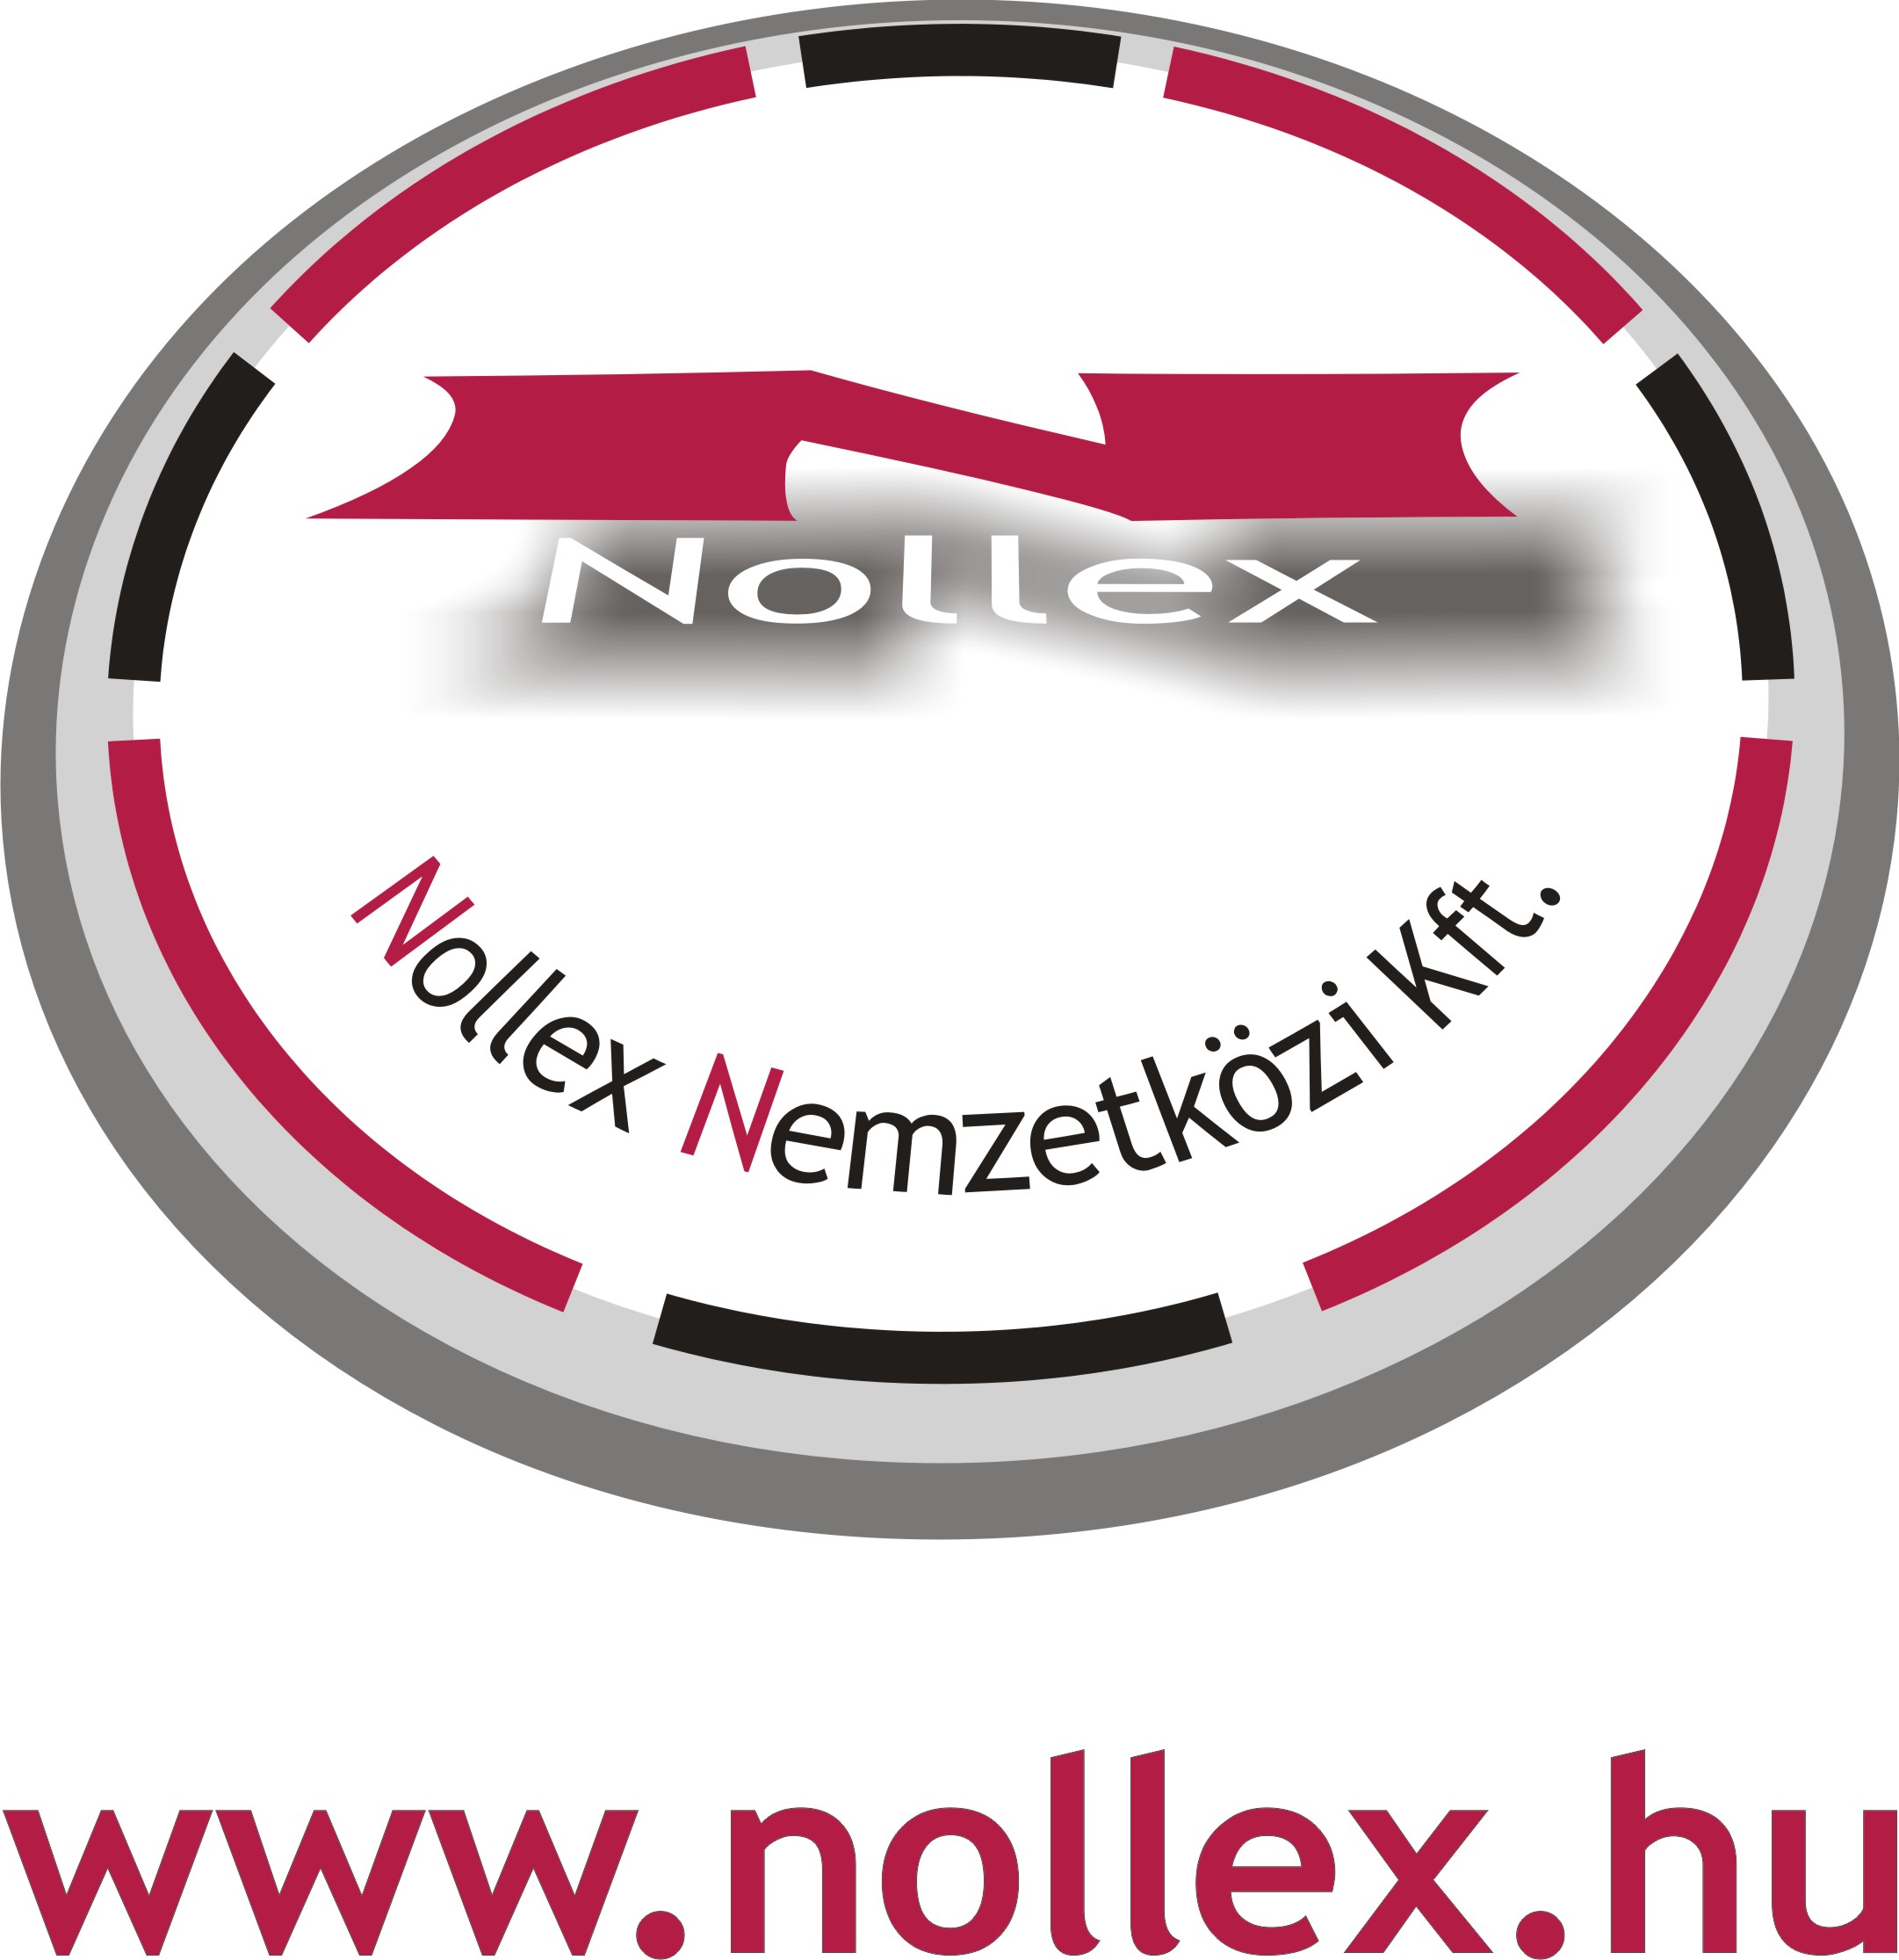 NOLLEX Nemzetközi Kft.